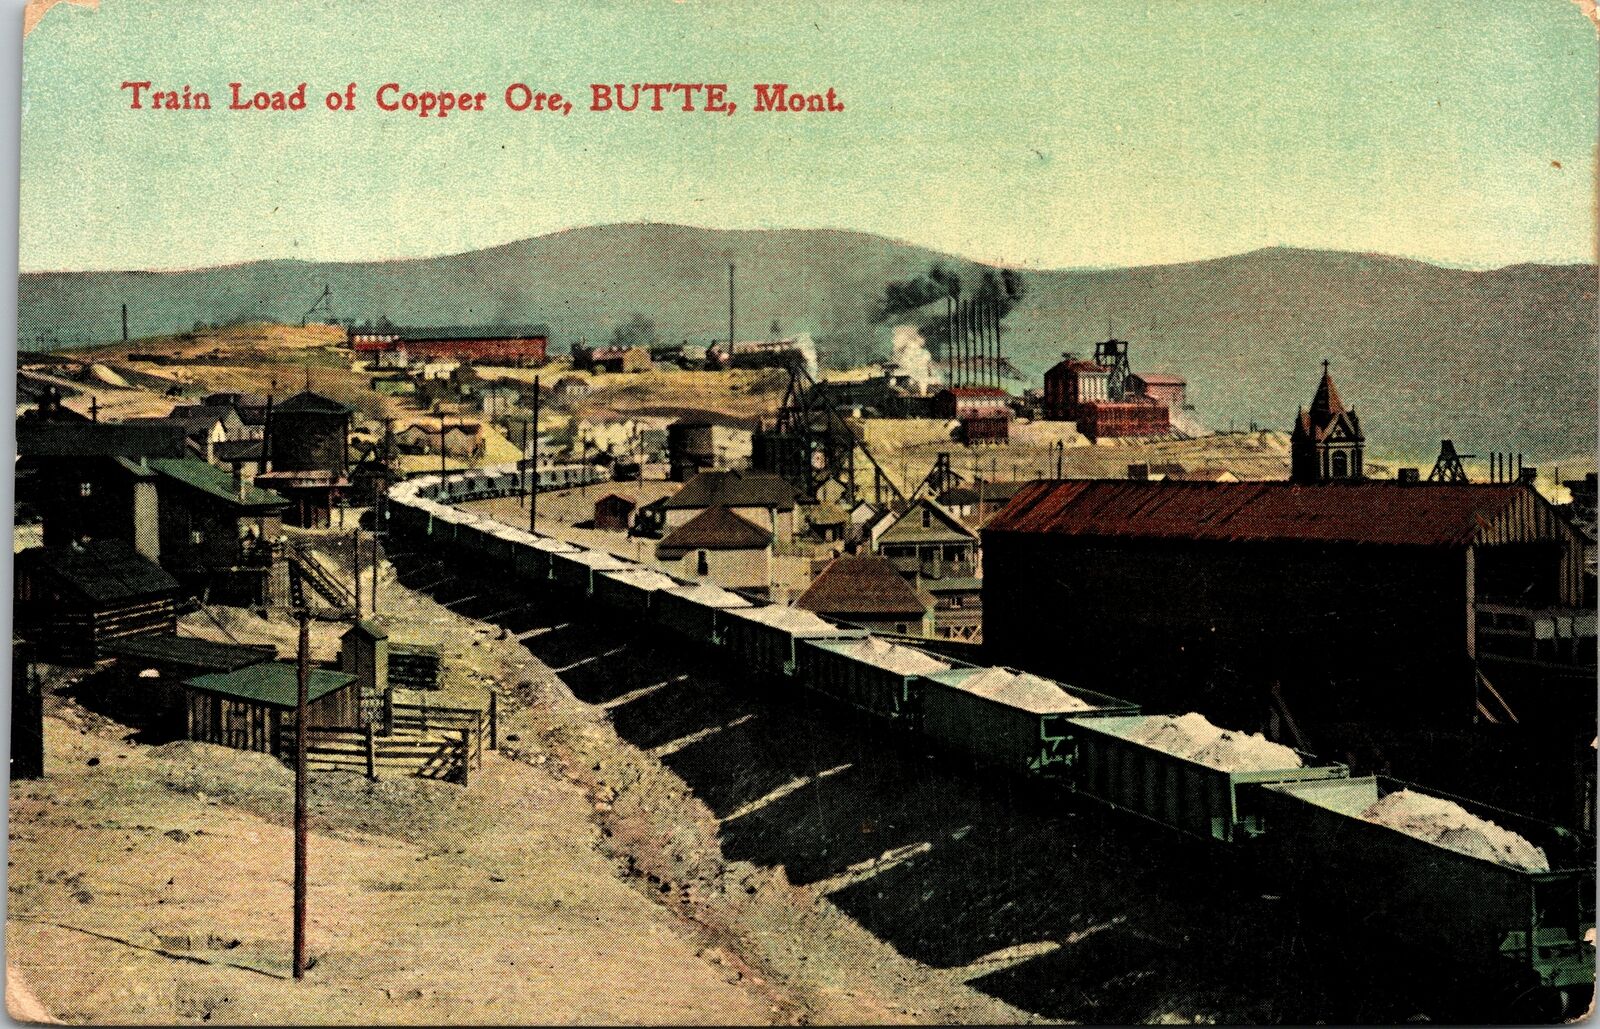 VINTAGE POSTCARD TRAIN LOAD OF COPPER ORE RAIL DEPOT BUTTE MONTANA 1912